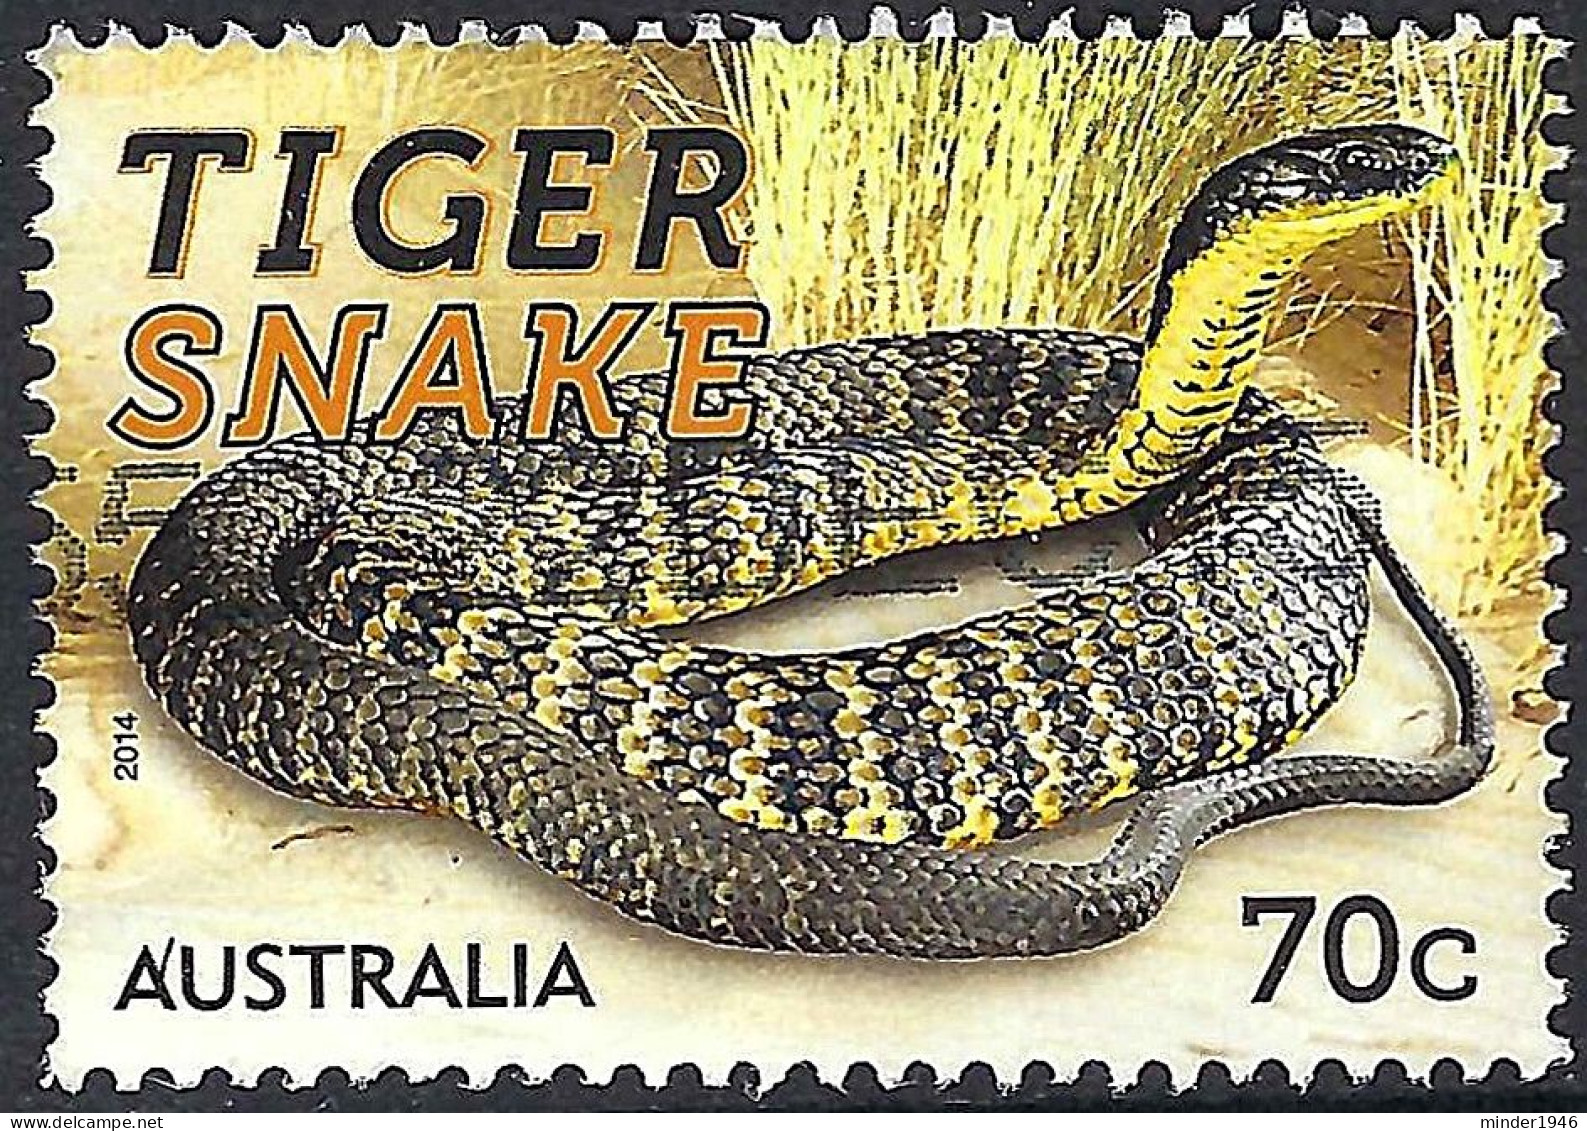 AUSTRALIA 2014 QEII 70c Multicoloured, Fauna-Things That Sting- Tiger Snake FU - Oblitérés